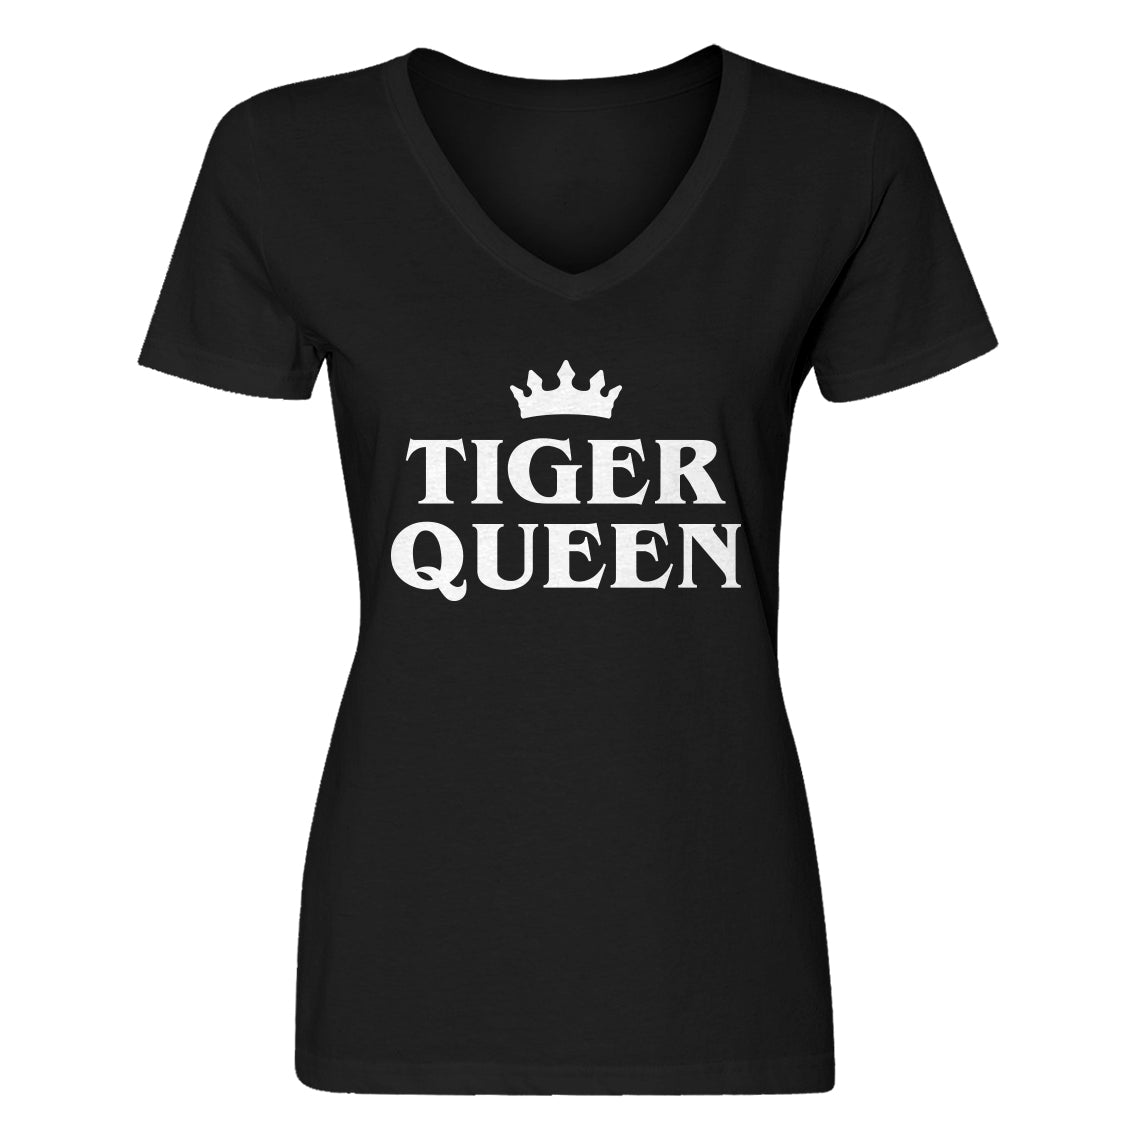 Womens Tiger Queen V-Neck T-shirt